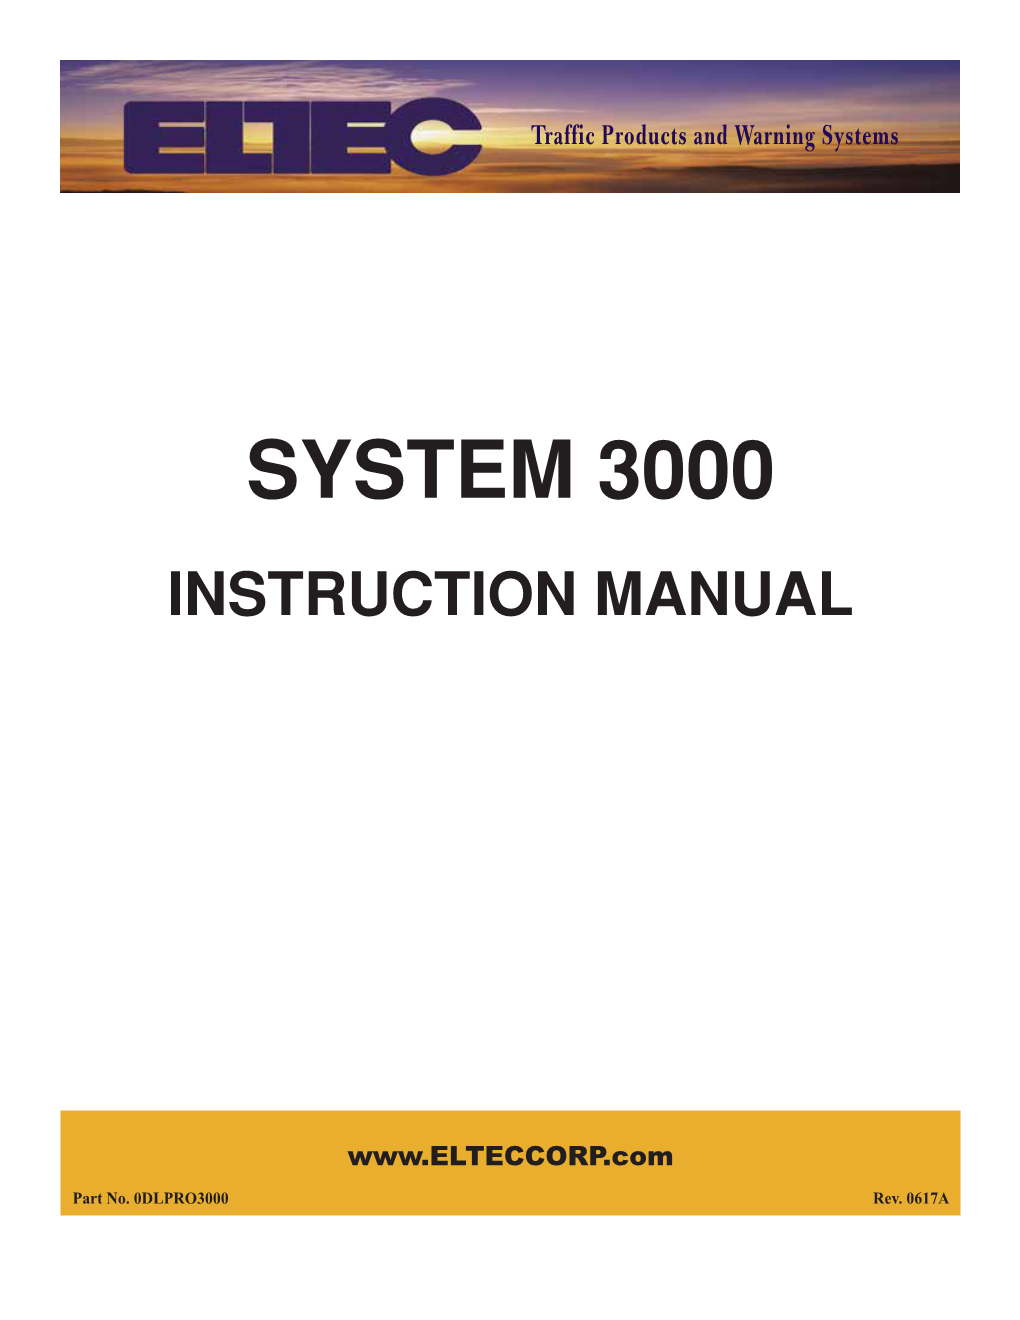 System 3000 Instruction Manual